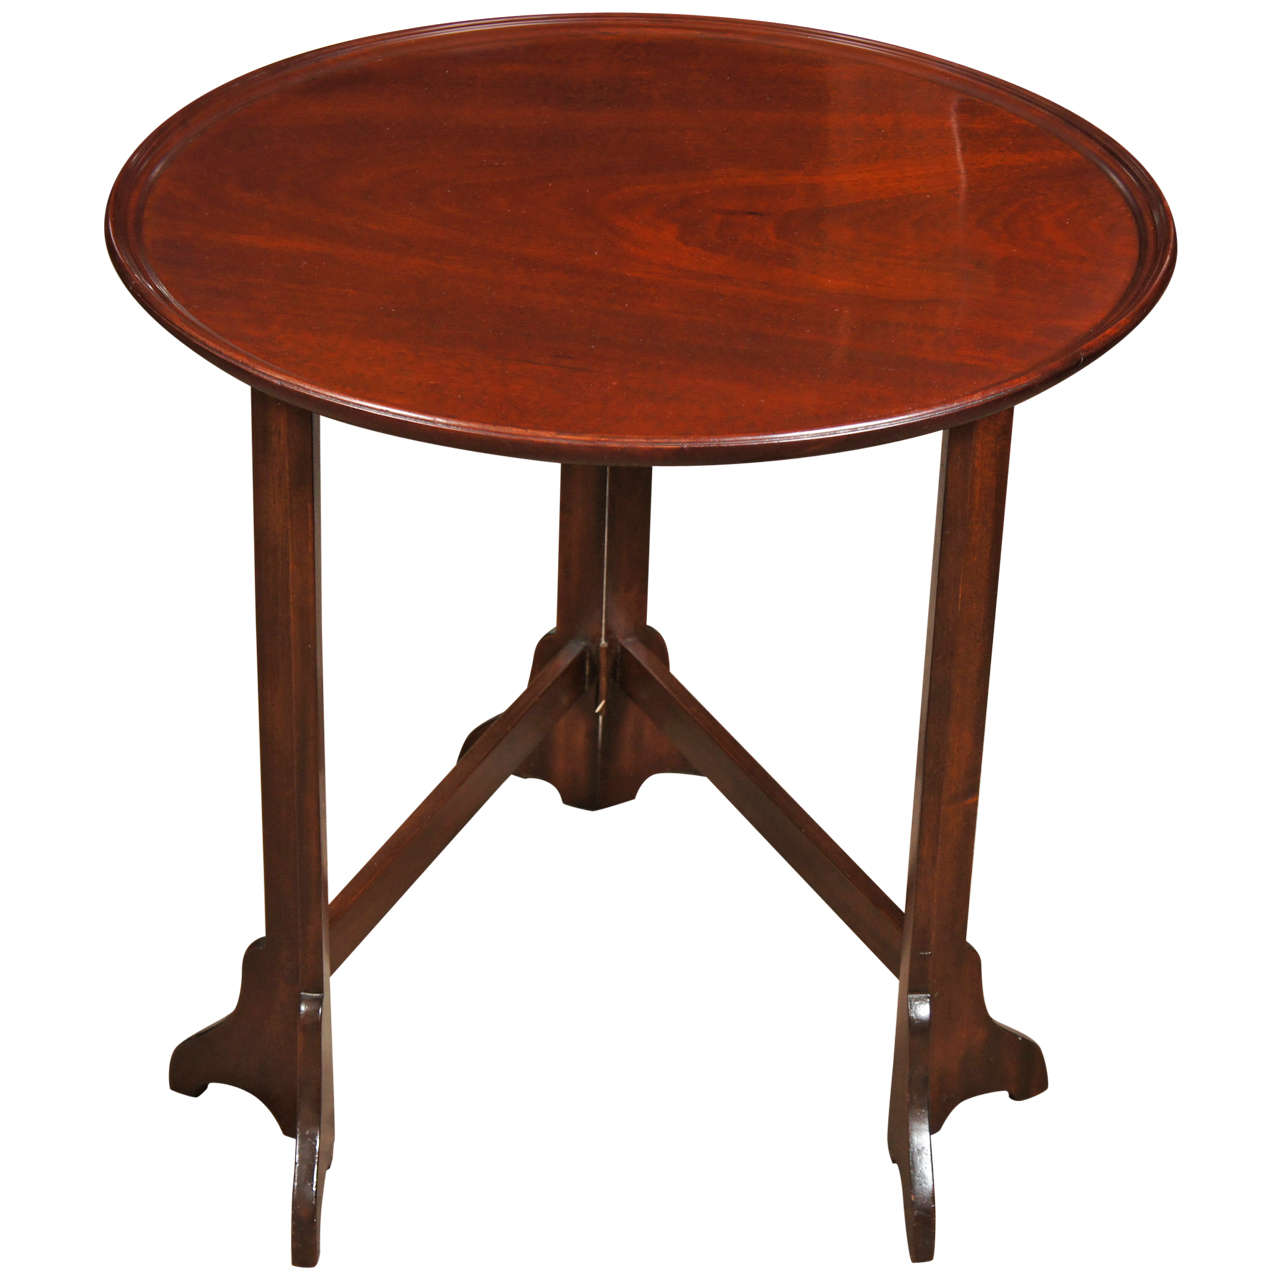 George III style mahogany fold up side table